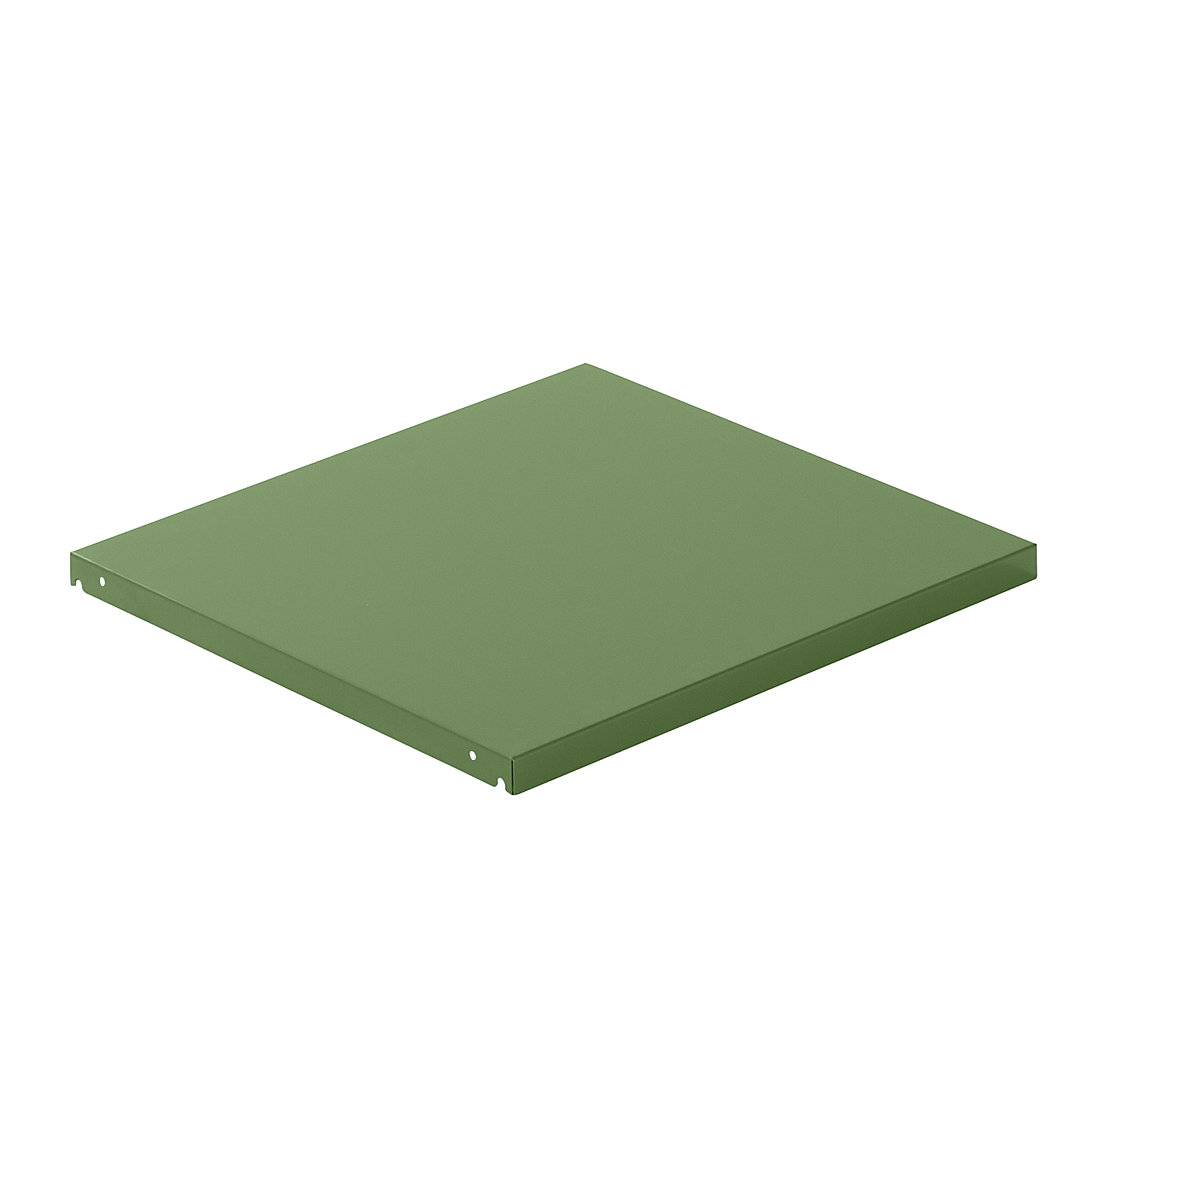 Sheet steel top shelf – LISTA, WxD 890 x 860 mm, max. shelf load 200 kg, reseda green